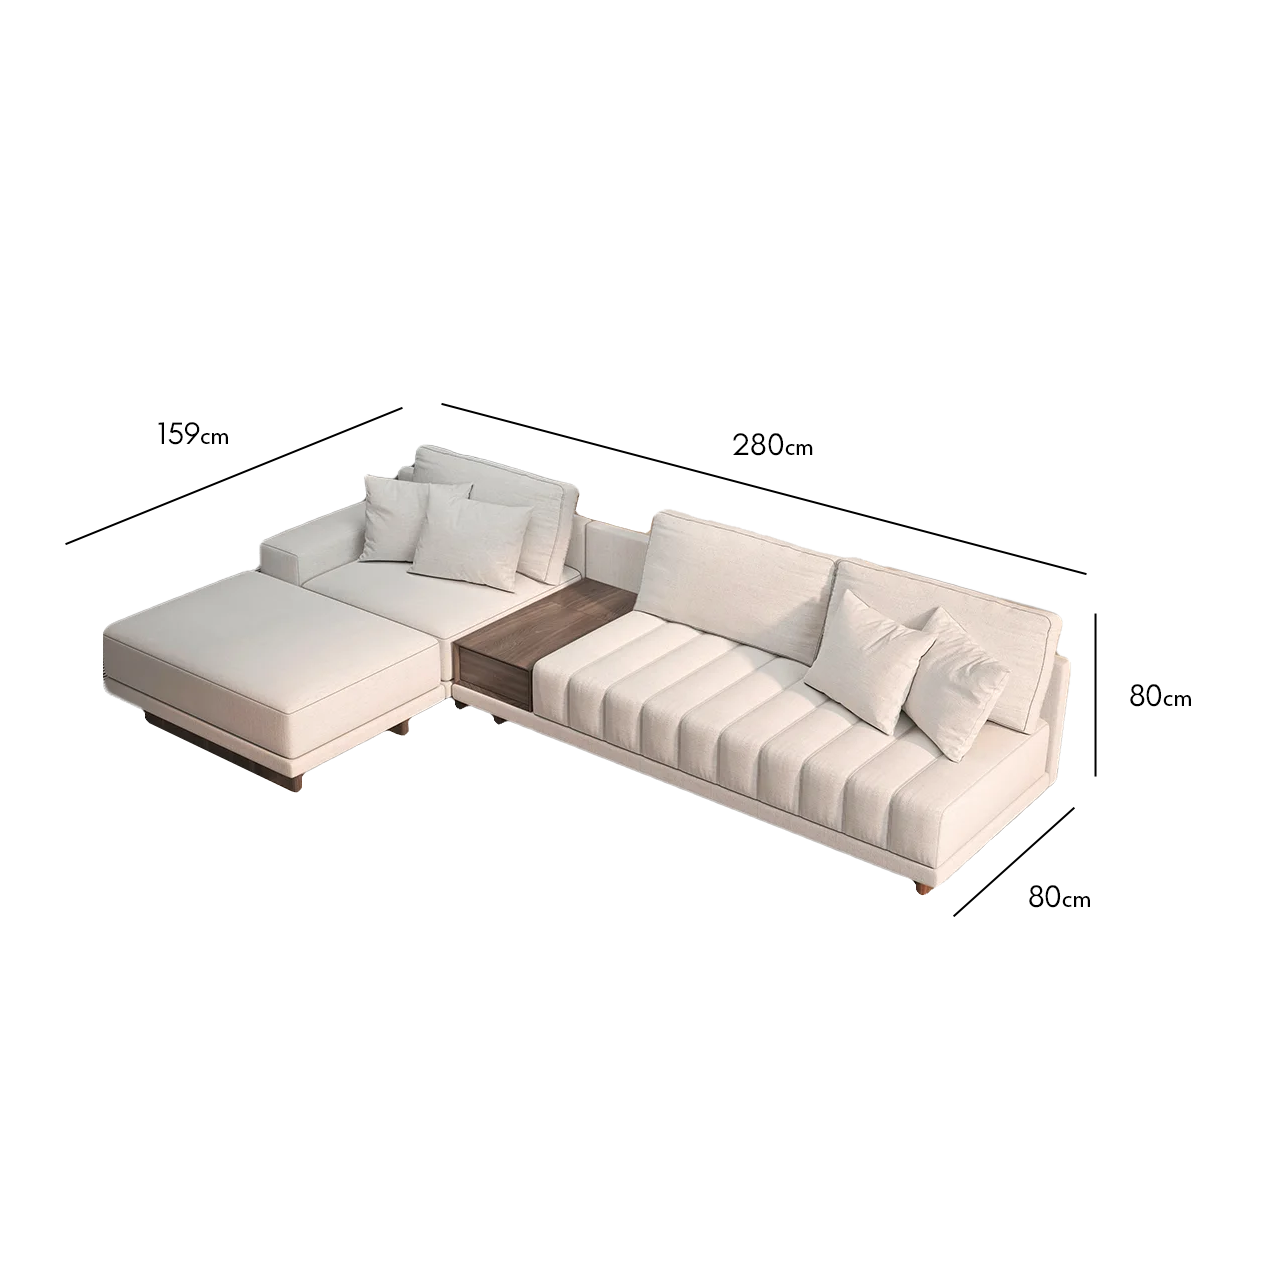 Beech wood corner sofa 280×150 cm - multiple colors - DECO235